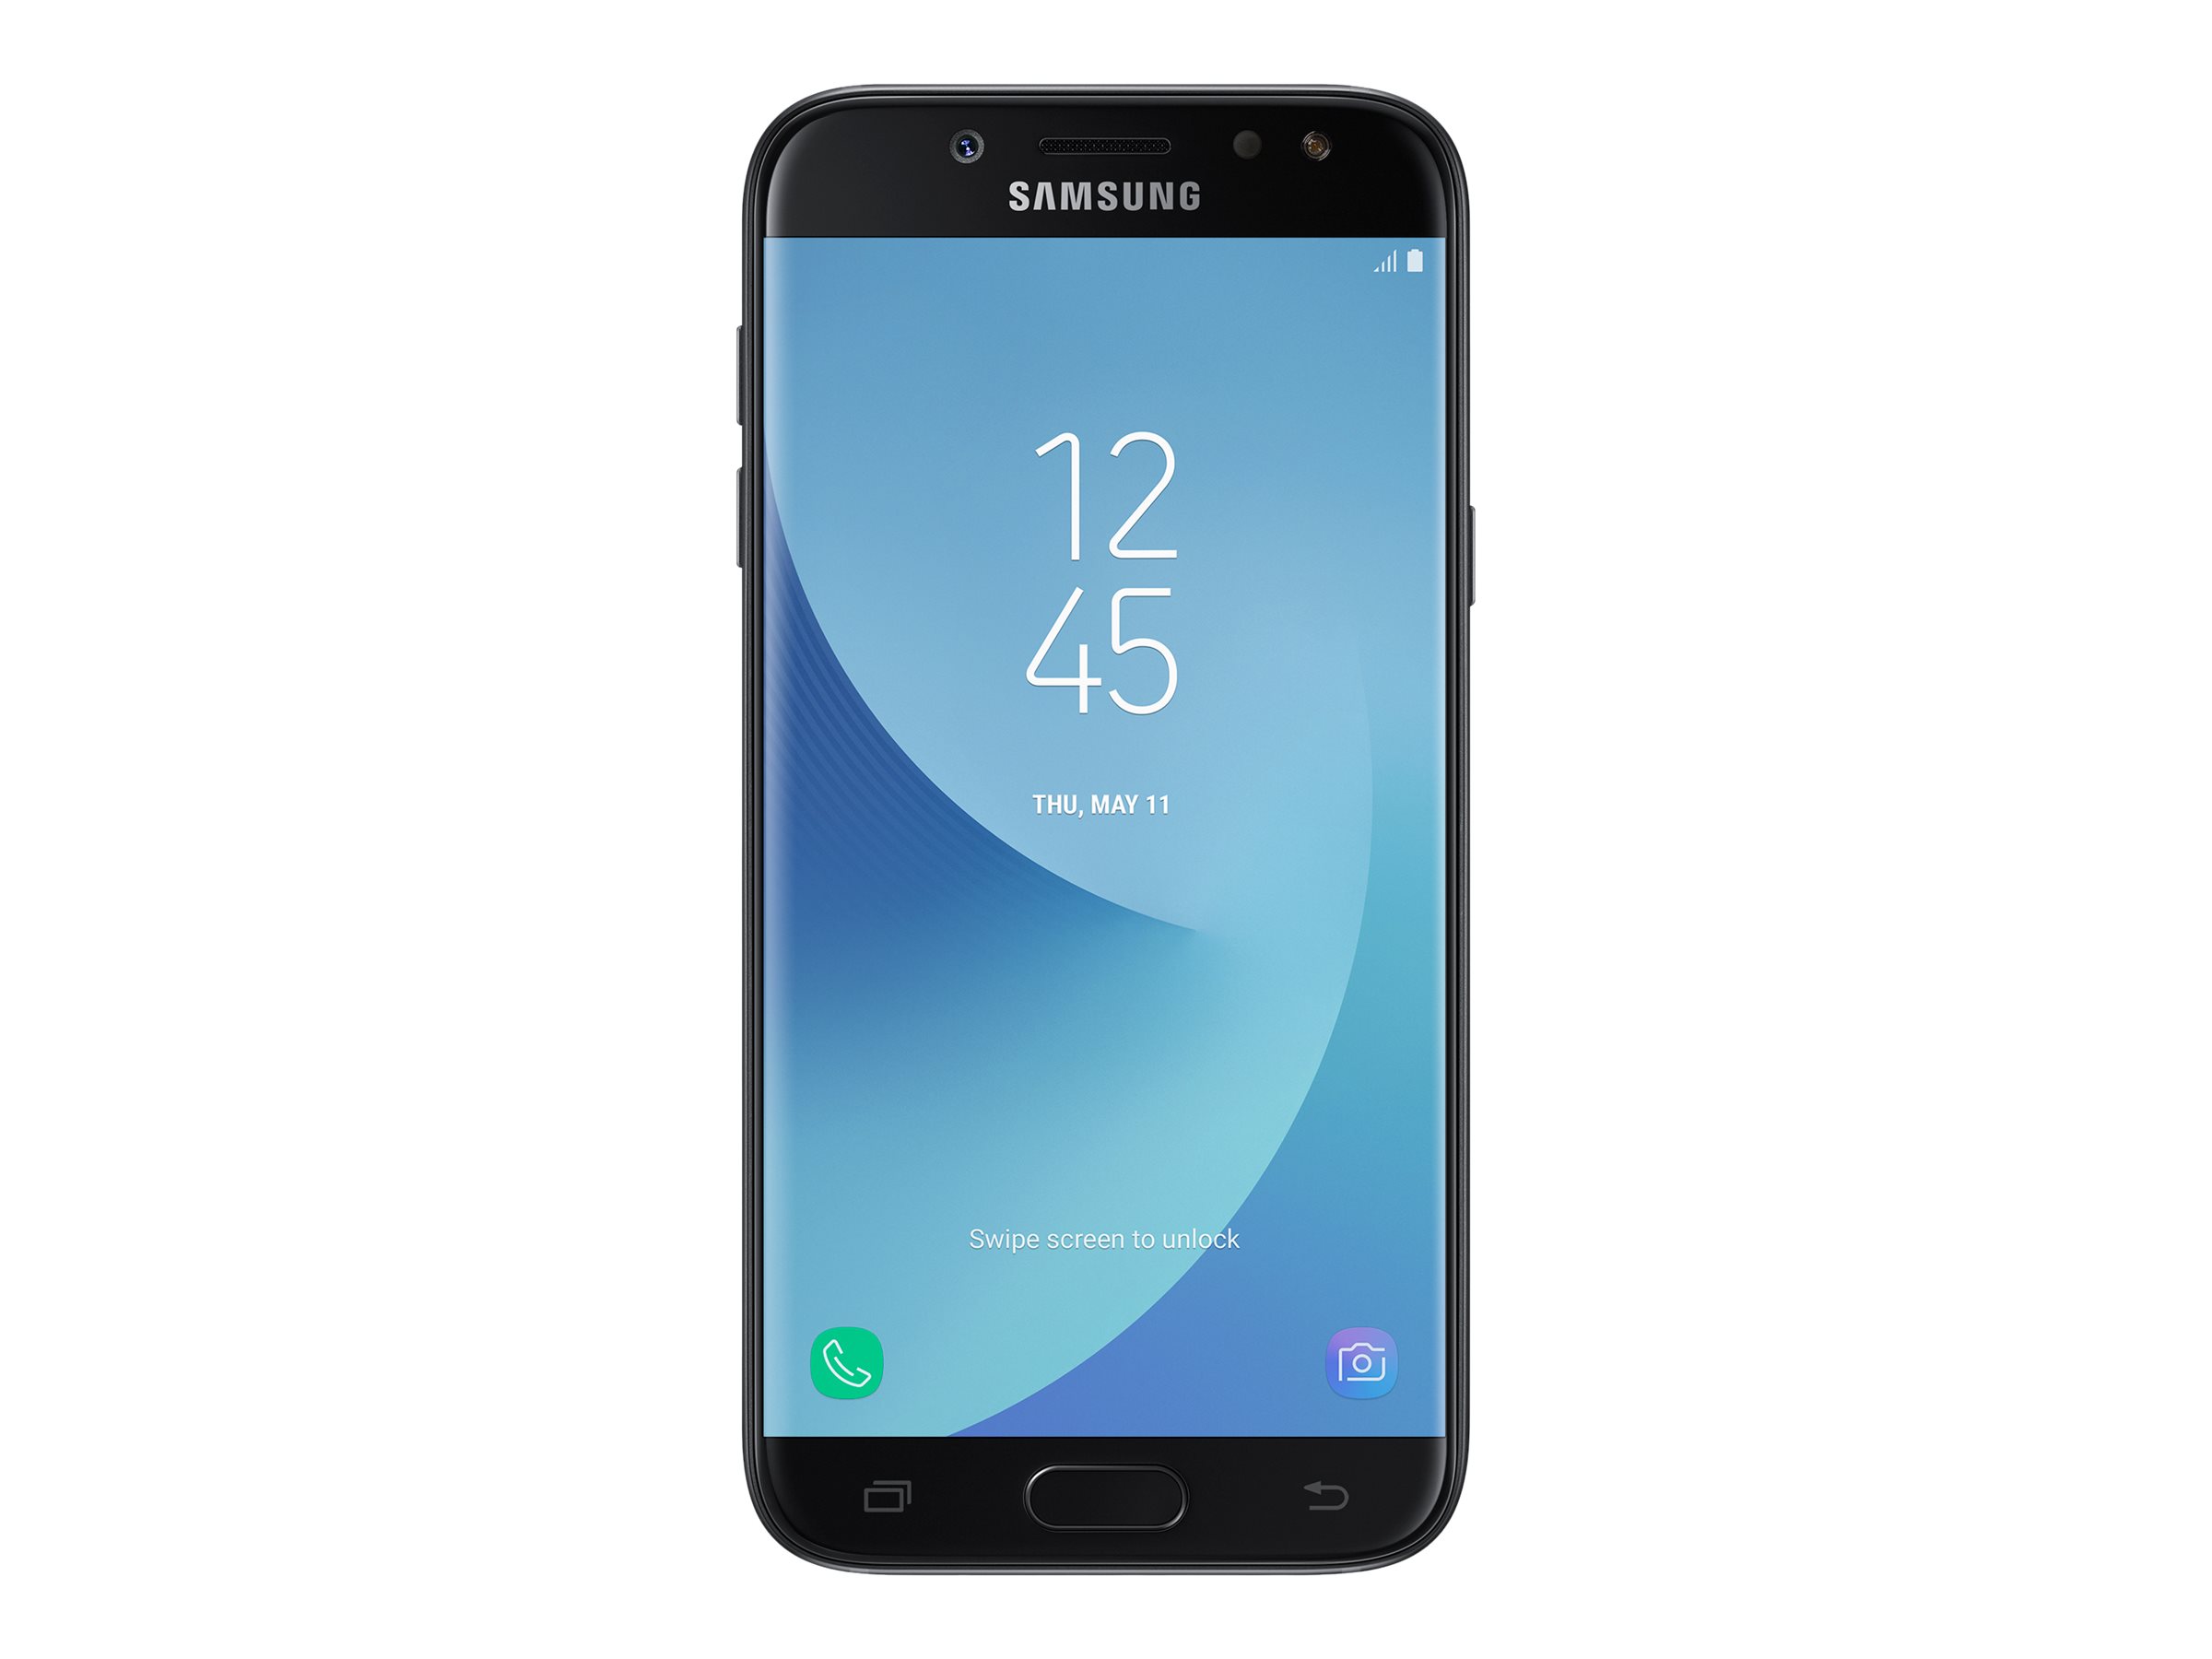 Samsung, Alcatel Senior phones shopping: prices, pictures, info